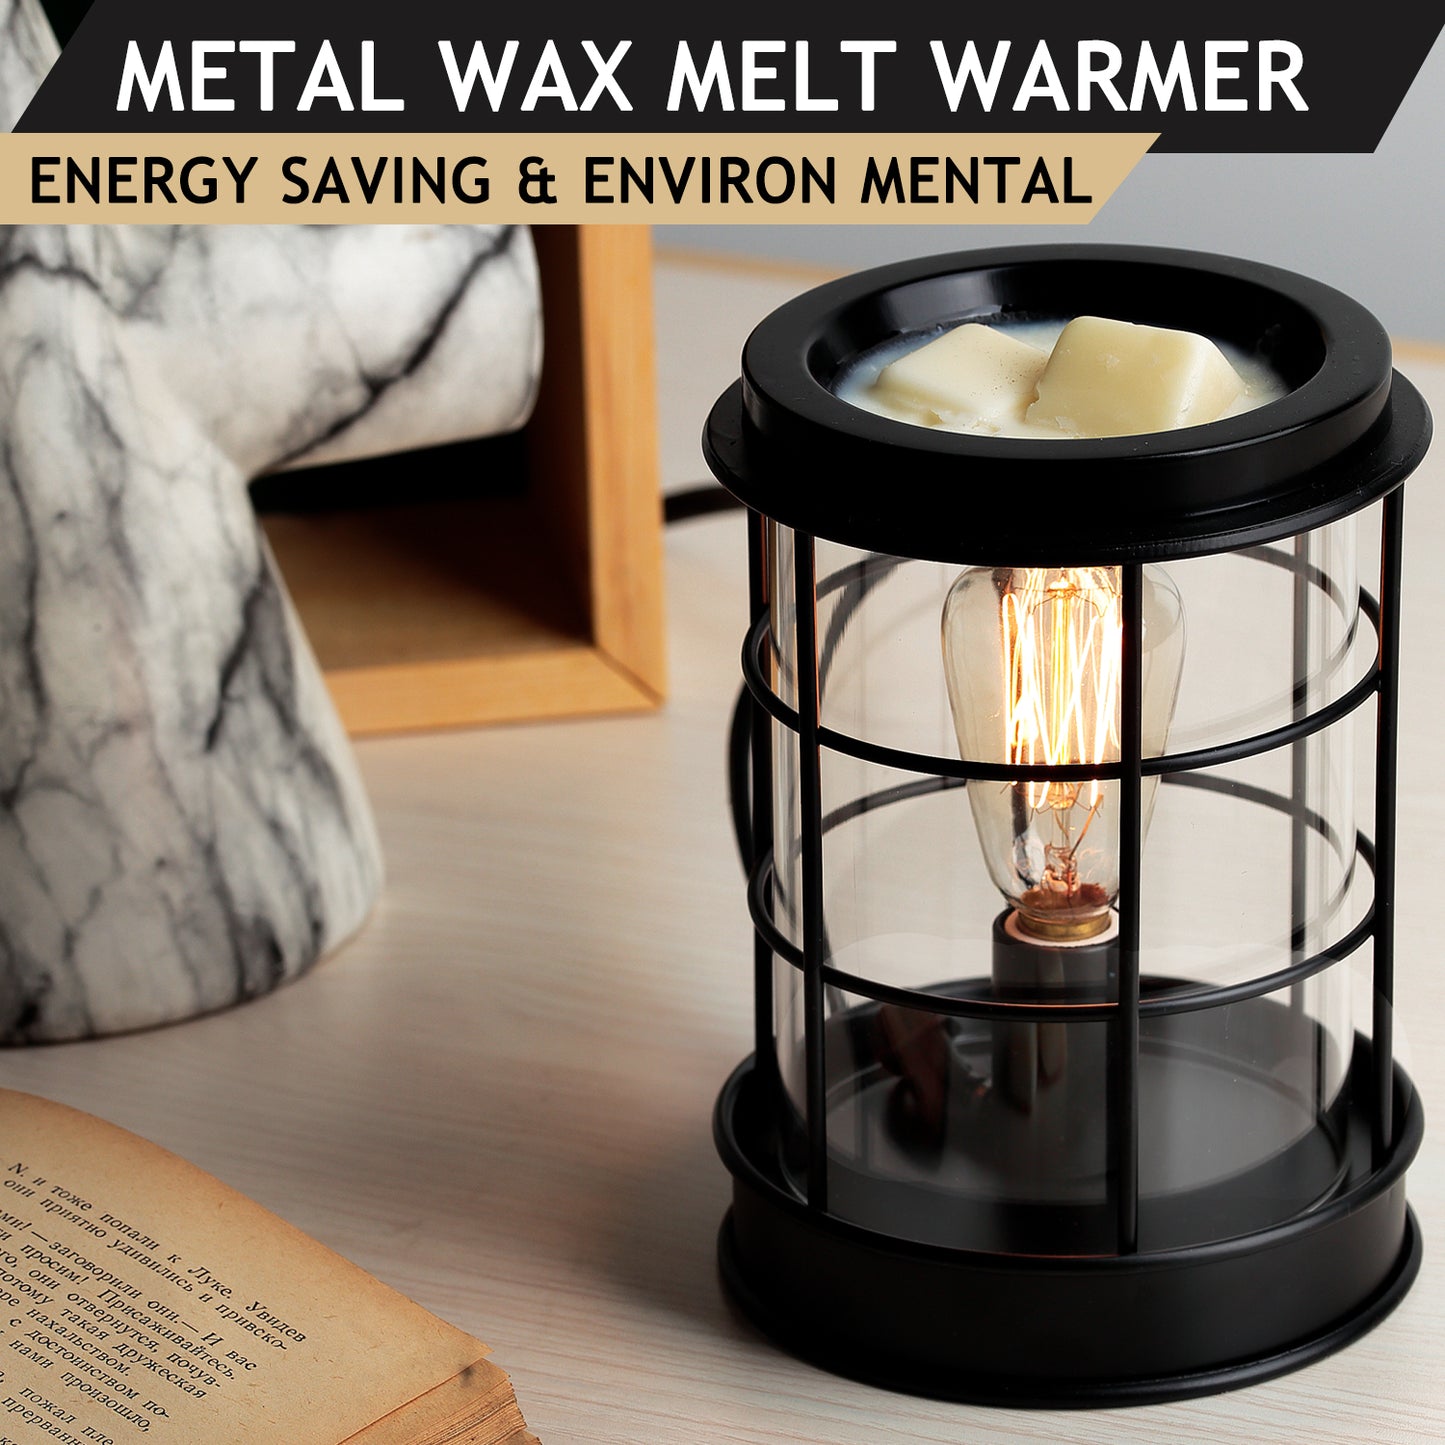 ORnix Metal Wax Warmer, Electric Wax Melt Warmer for Scented Wax